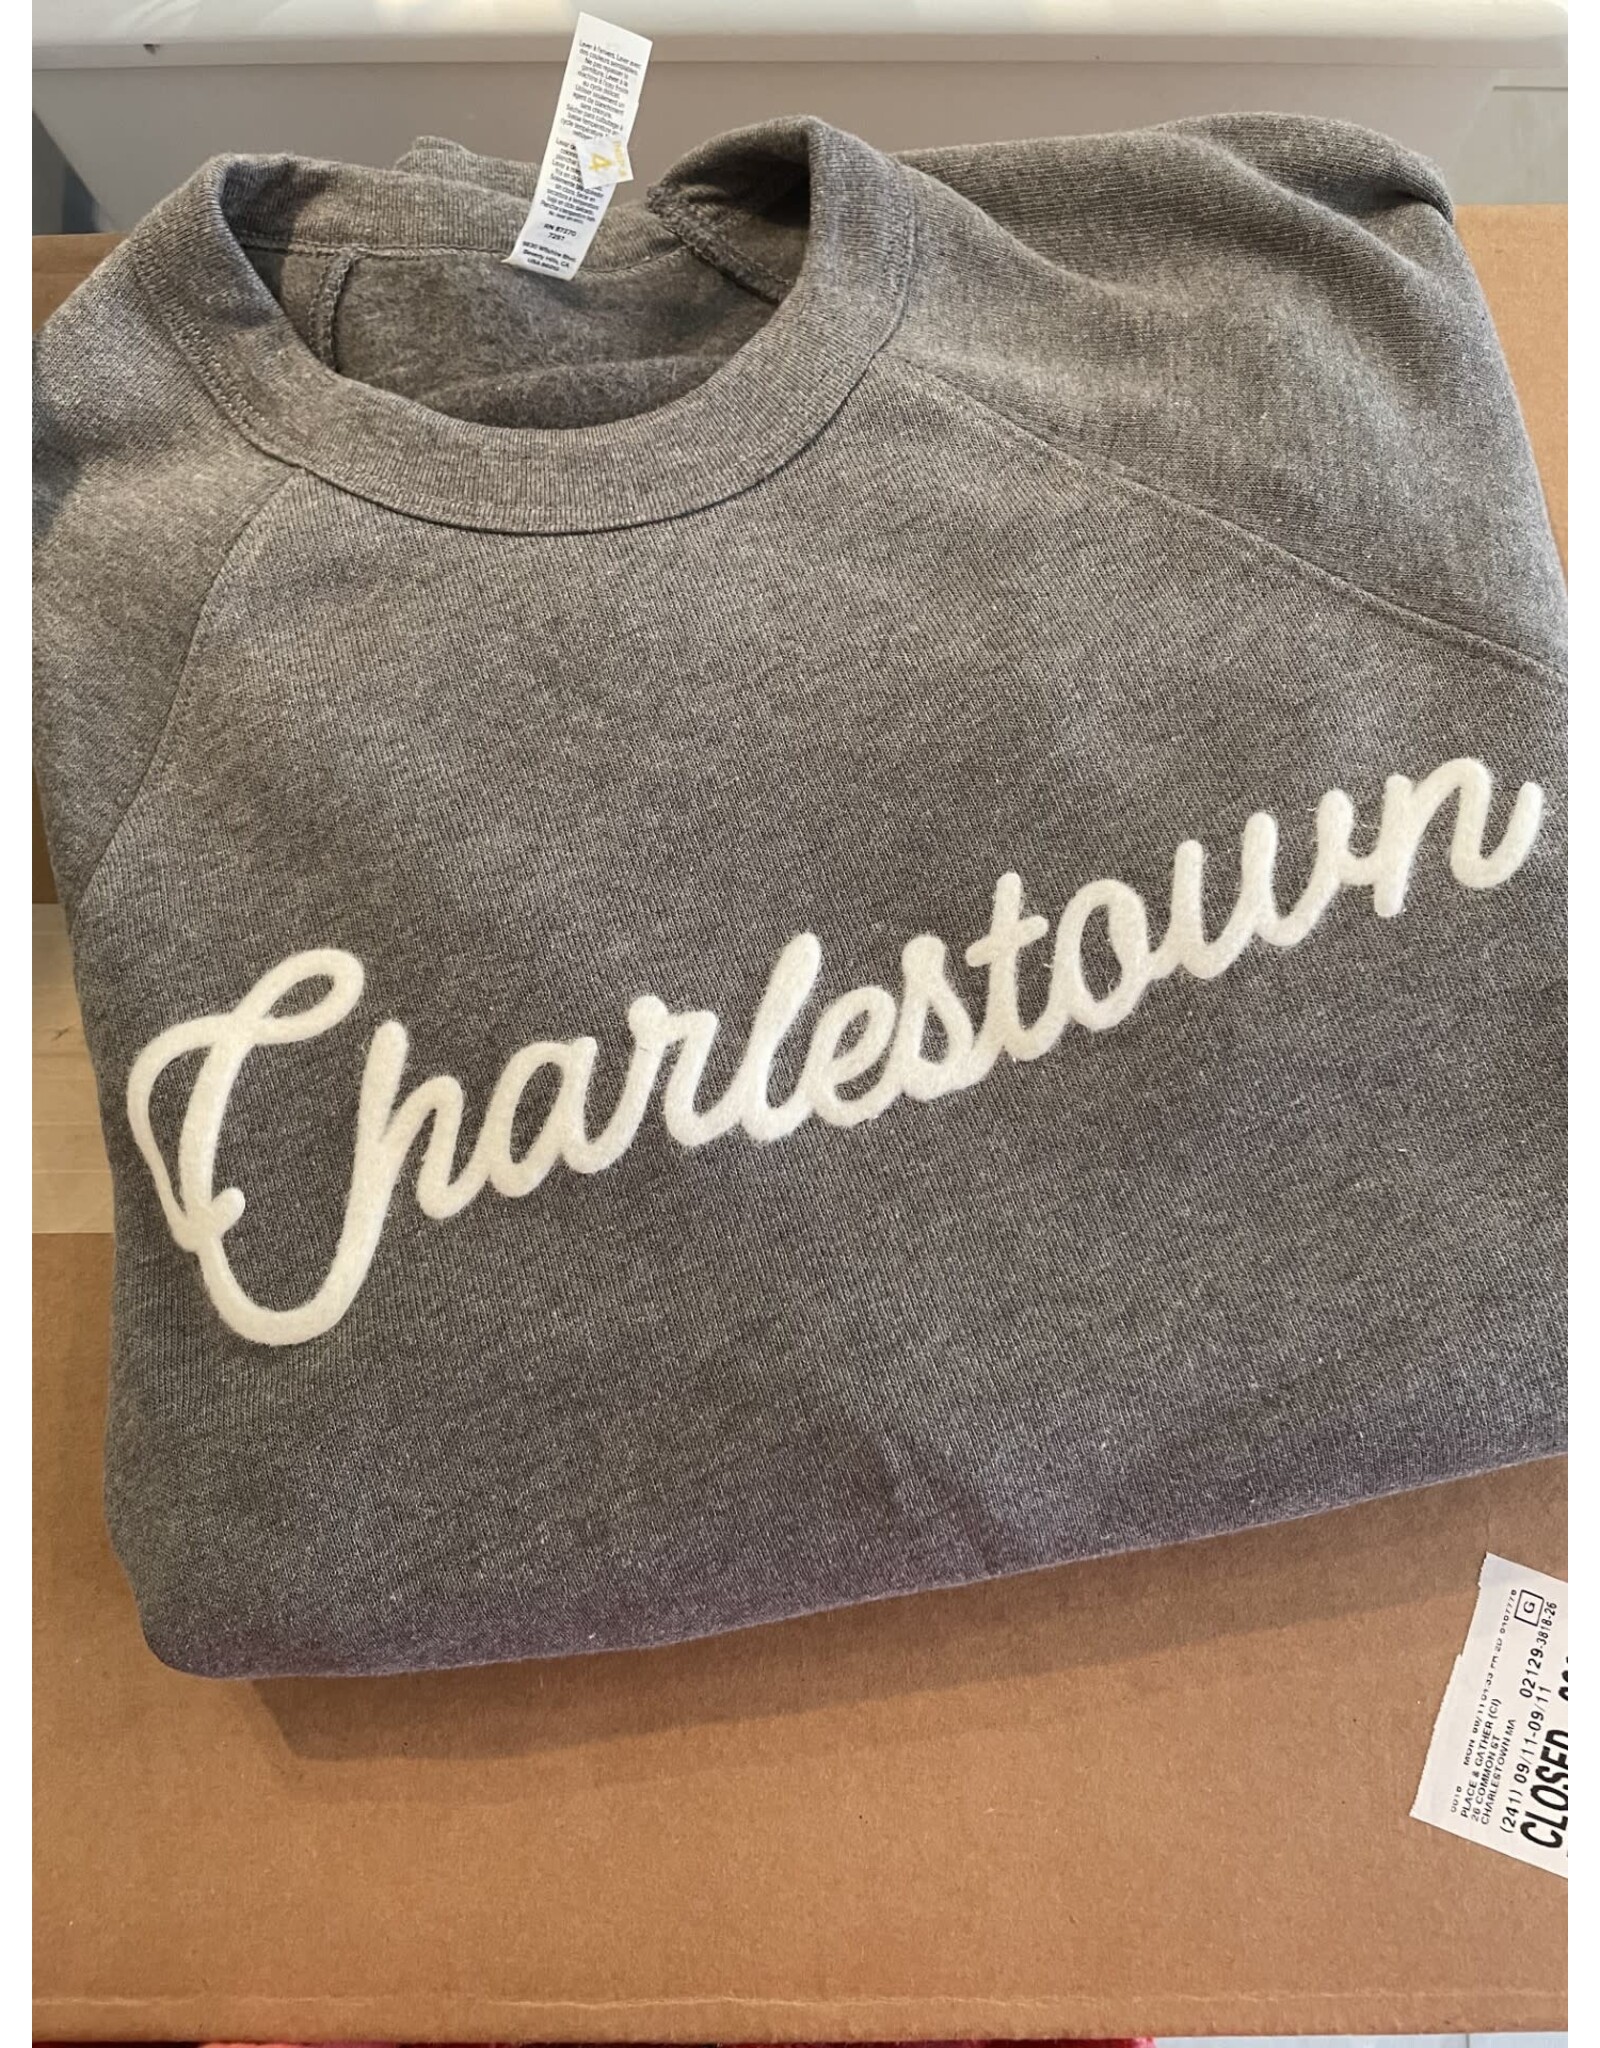 Chitown Clothing Charlestown Felt Applique Sweatshirt in Gray